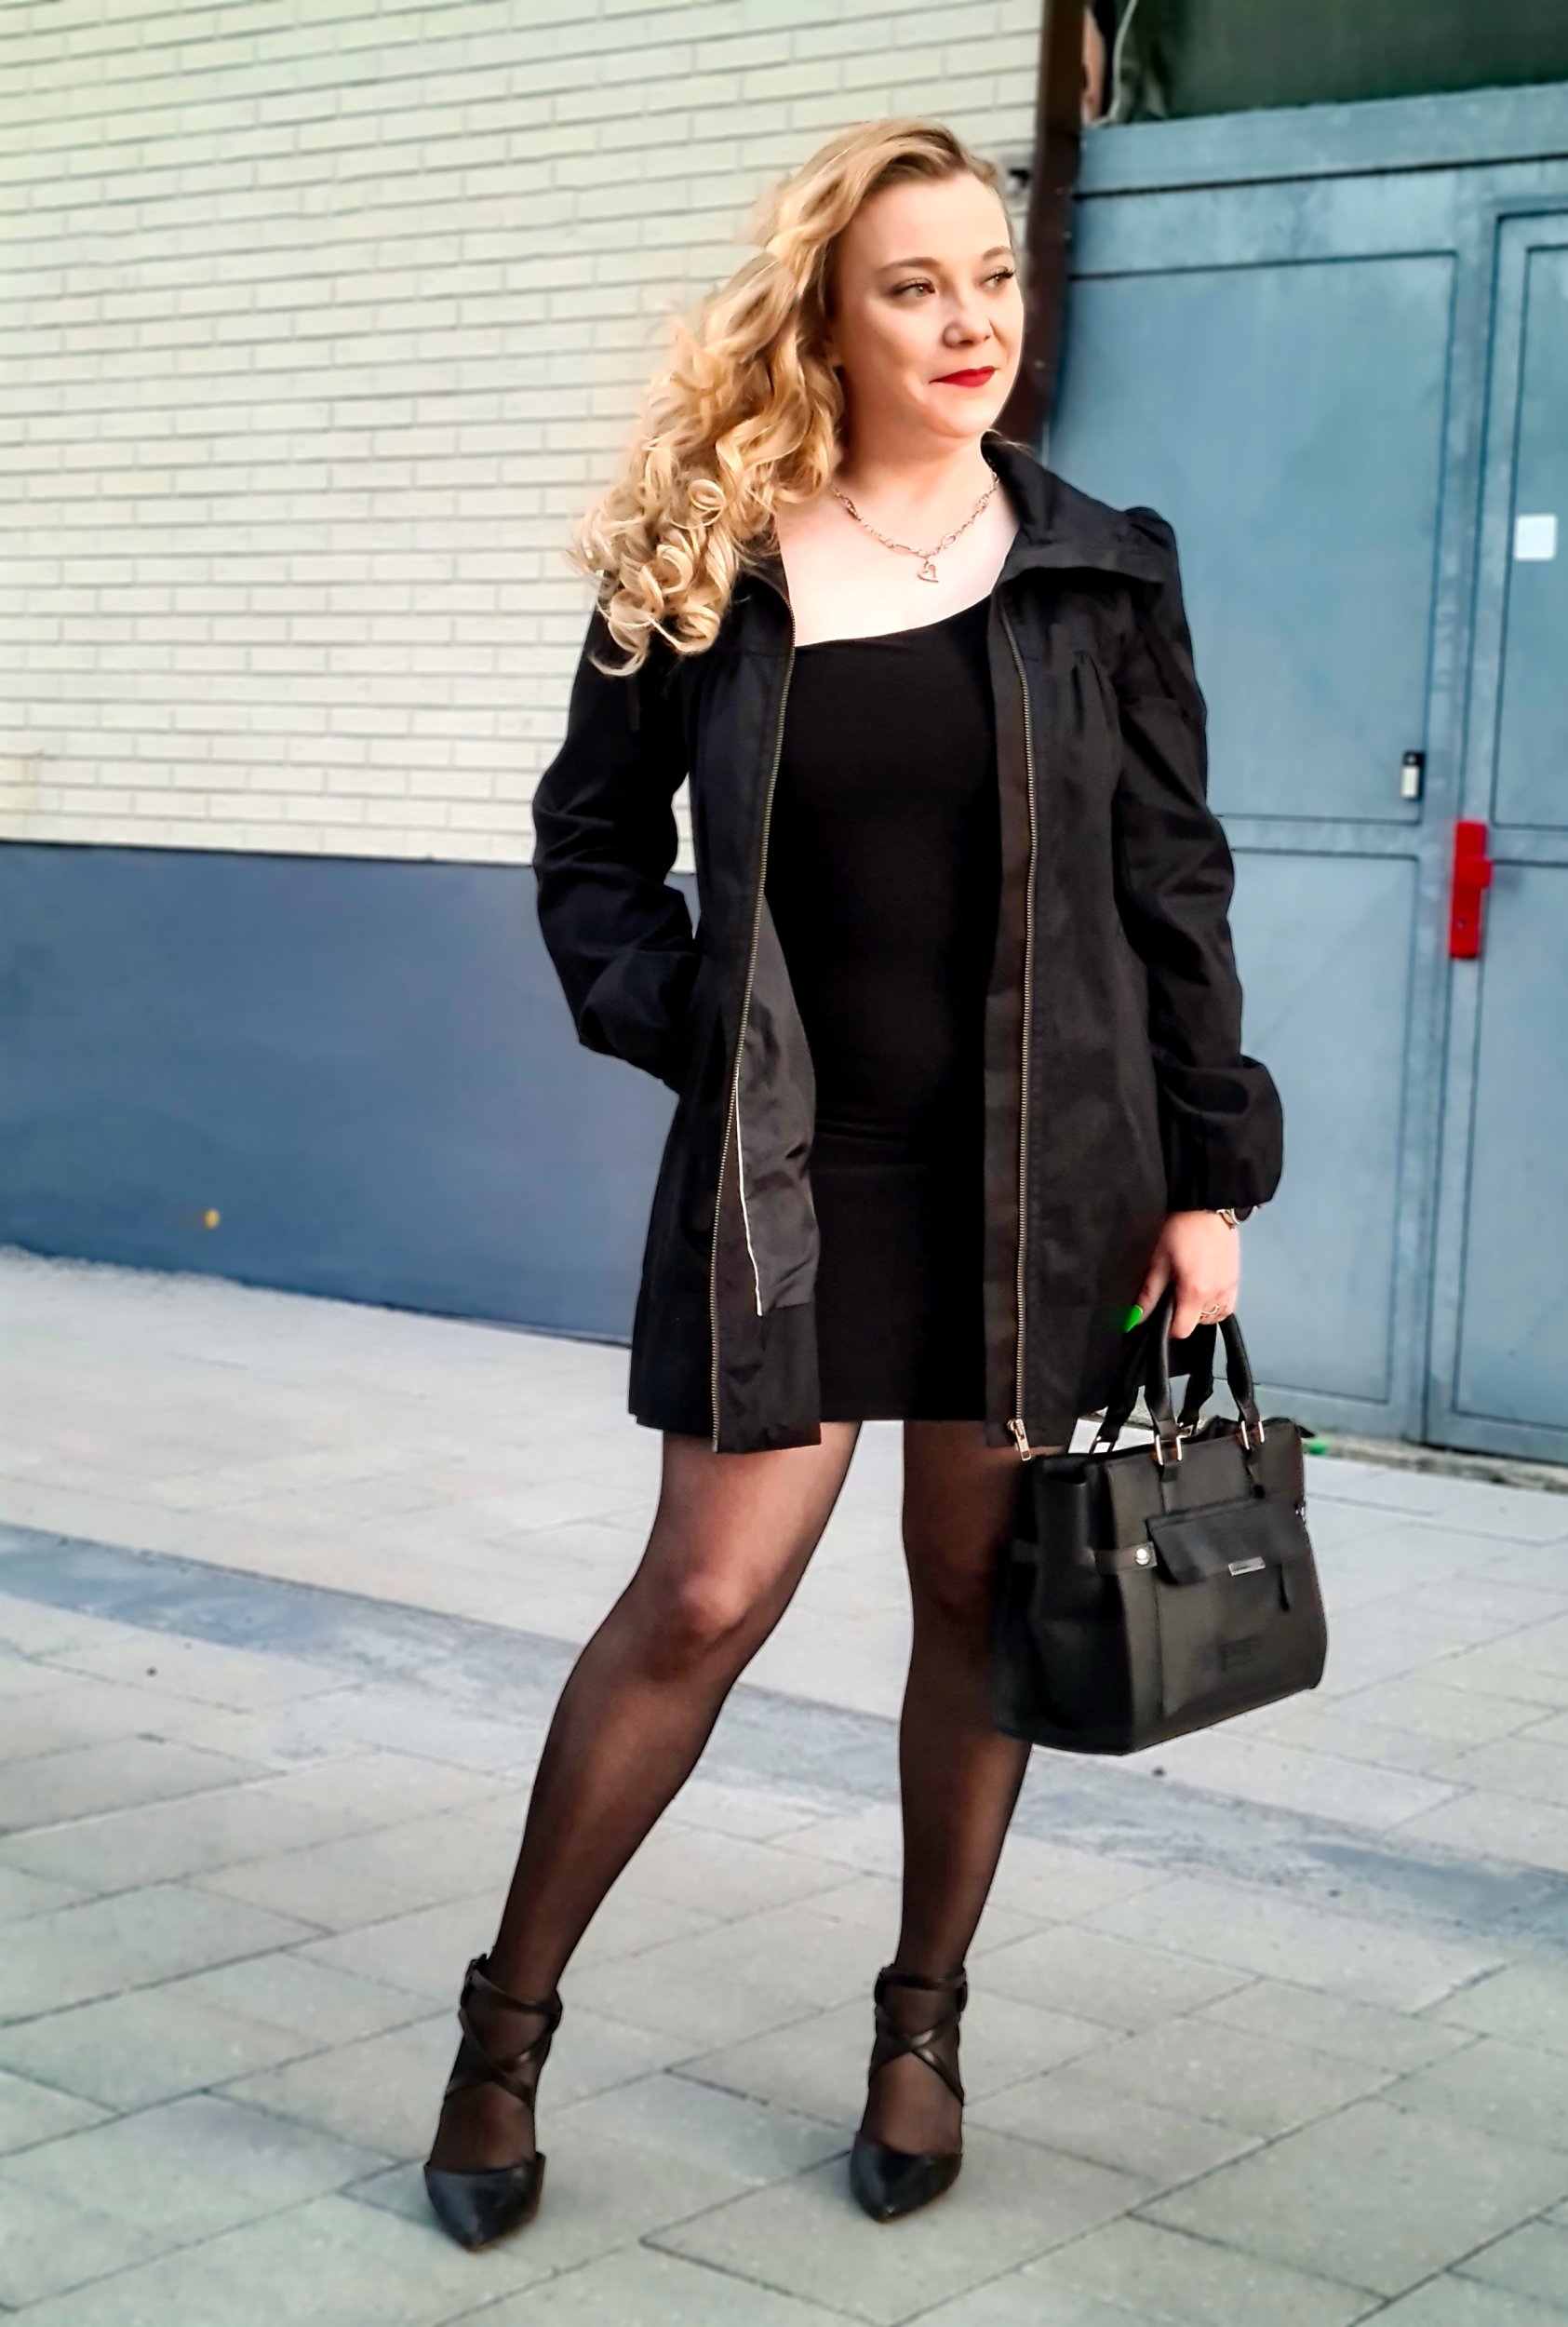 Meet Amazing Blondesluder: Top Escort Girl - model preview photo 2 